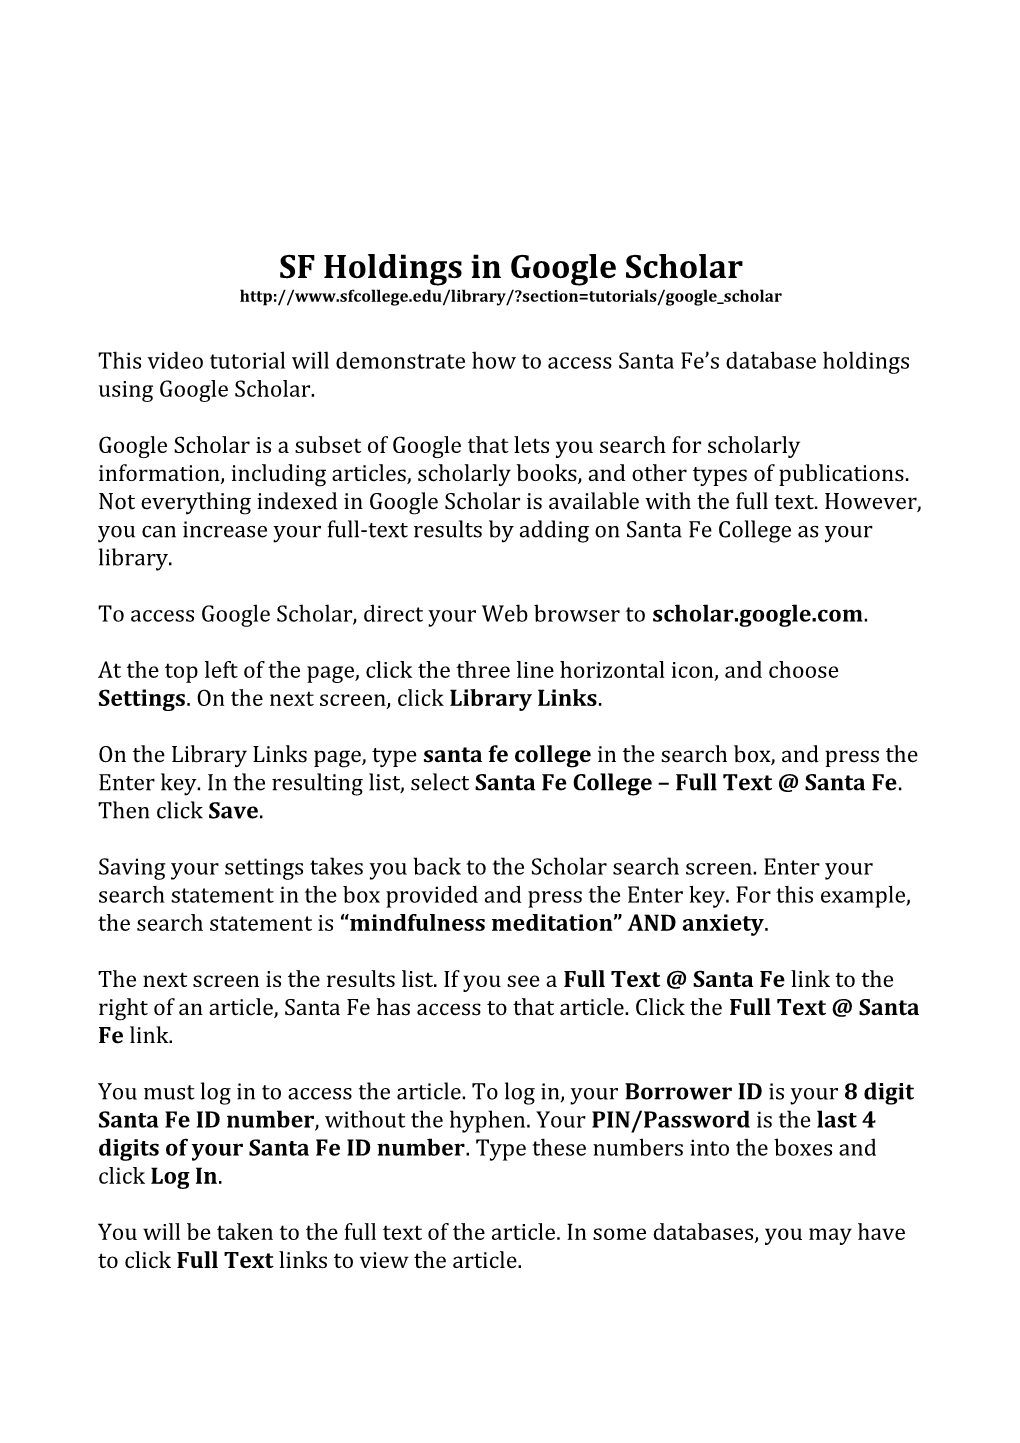 Video Tutorials: SF Holdings in Google Scholar